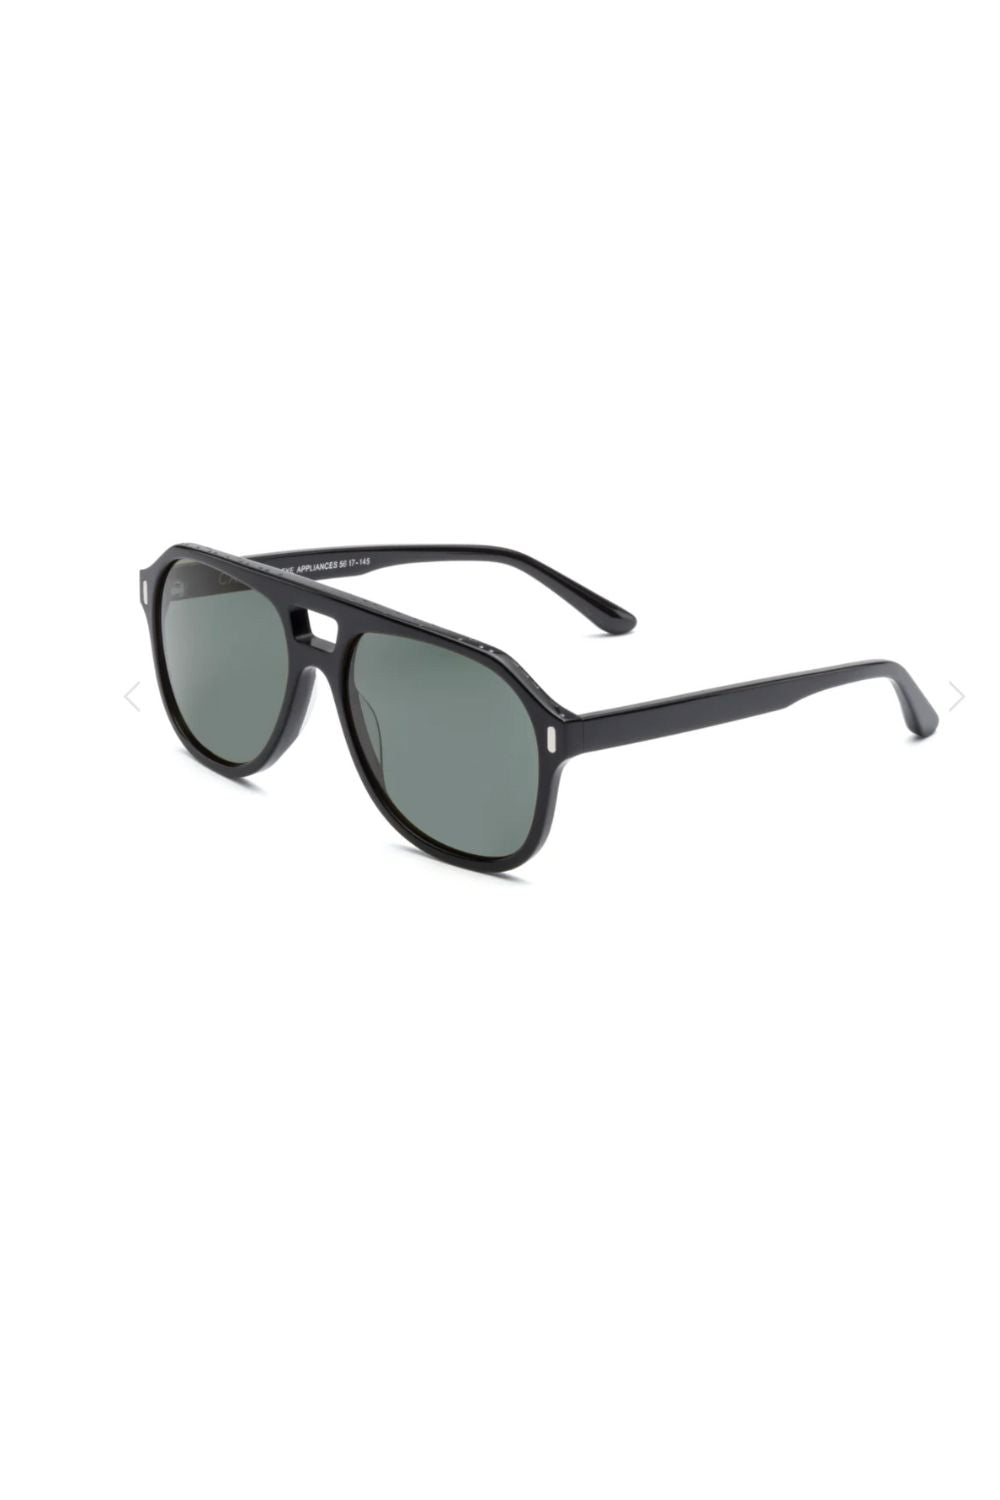 RCA Sunglasses - Gloss Black